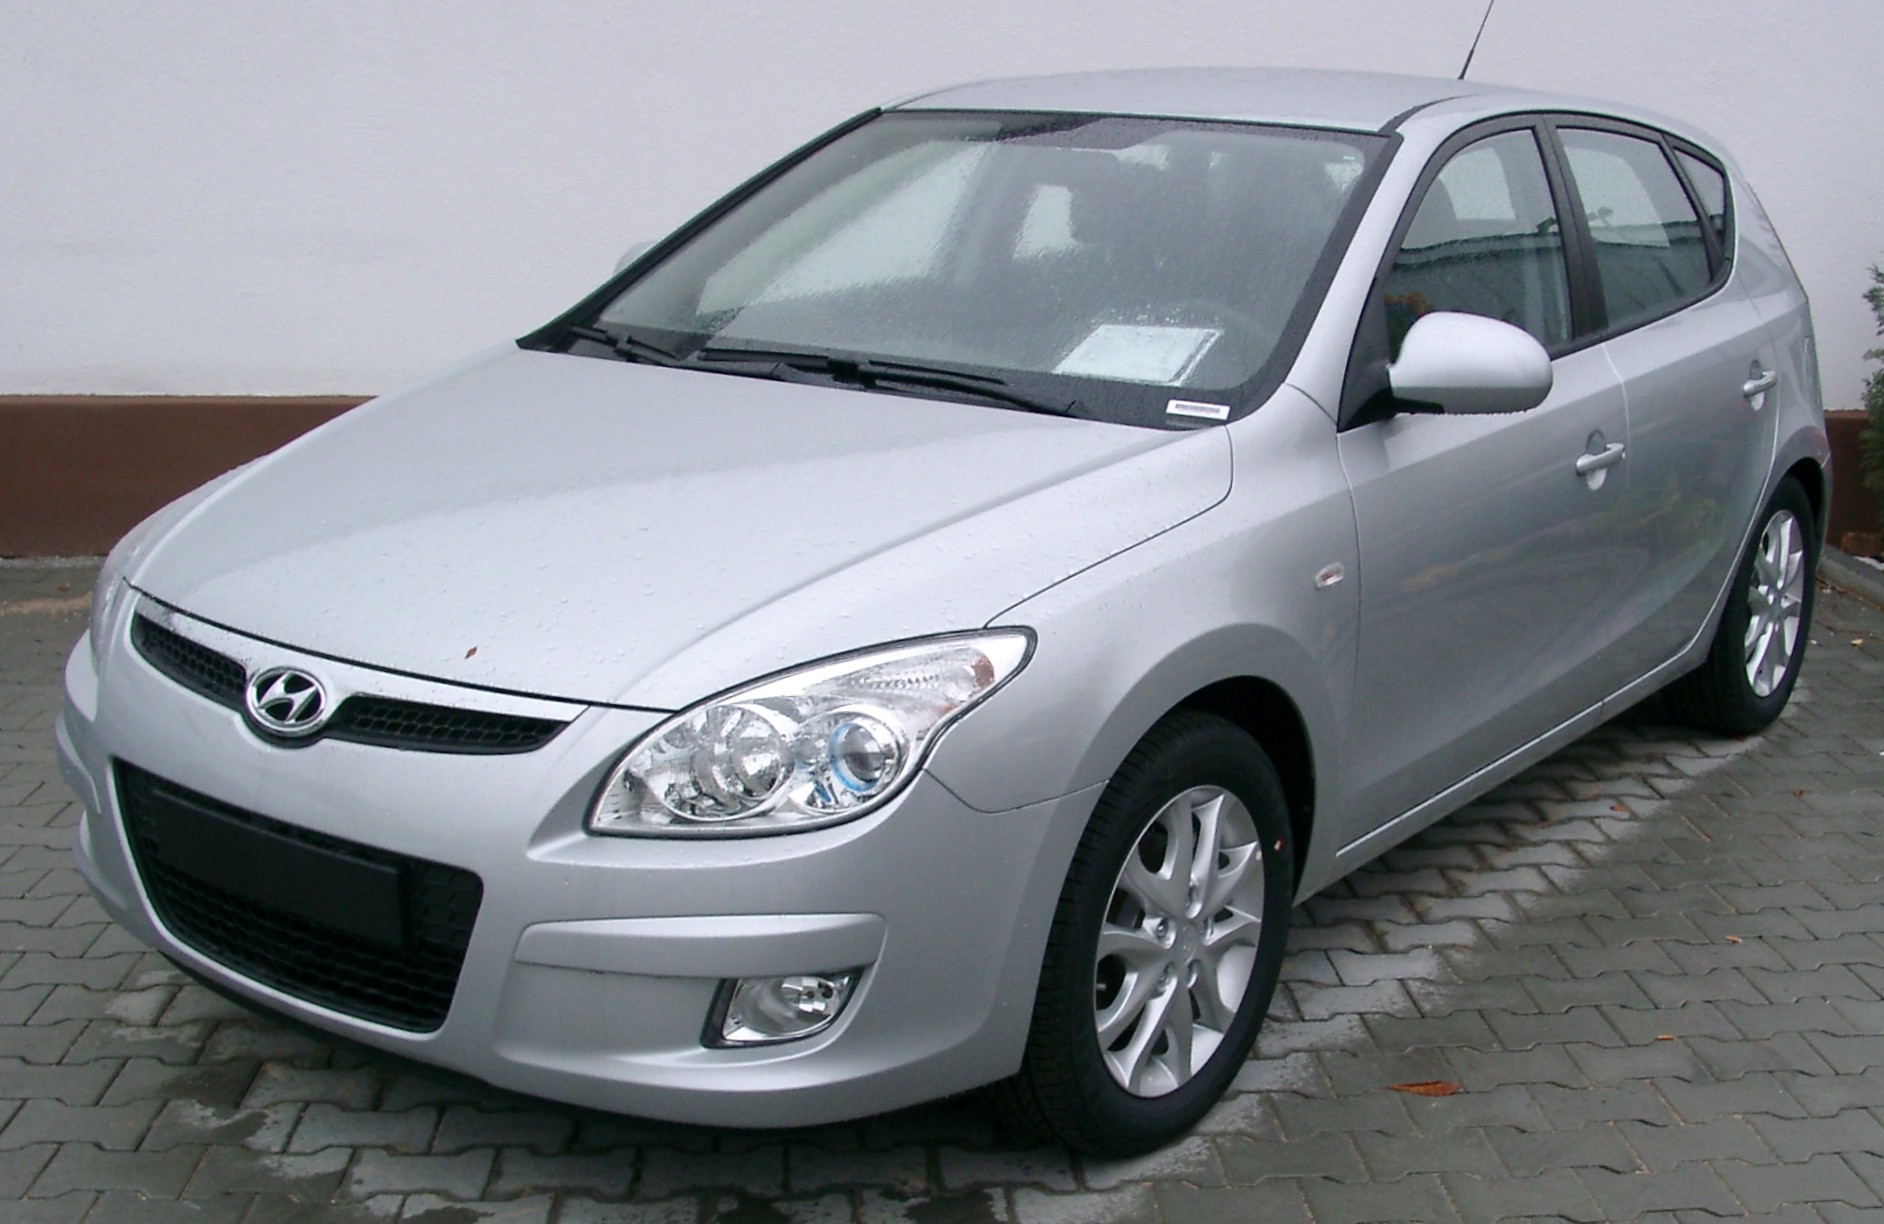 Aangename verrassing - Hyundai i30 (2007-)